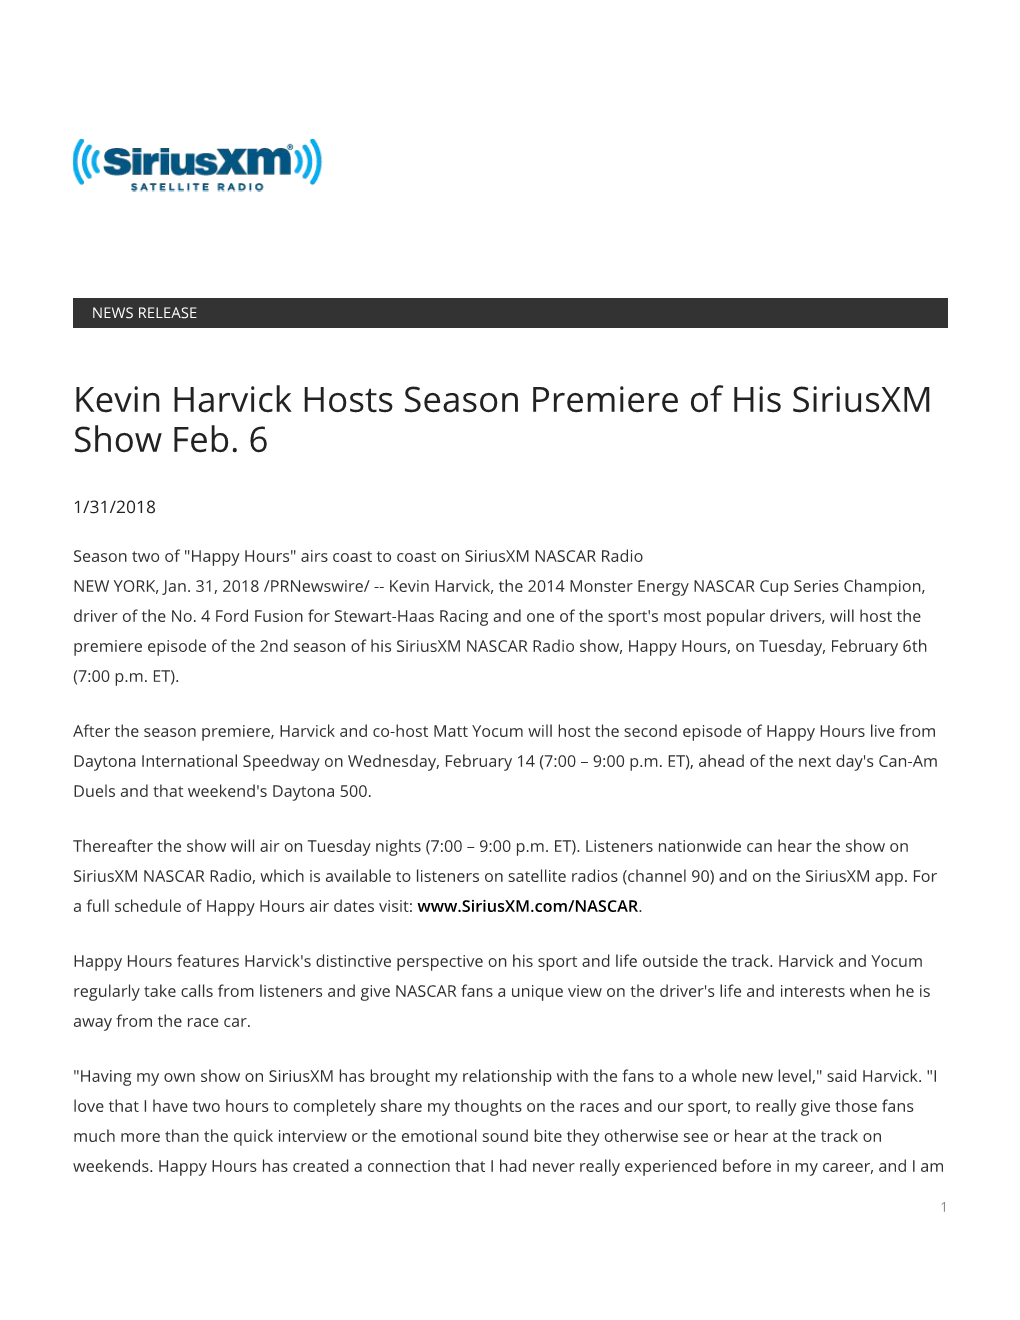 Kevin Harvick Hosts Season Premiere of His Siriusxm Show Feb. 6